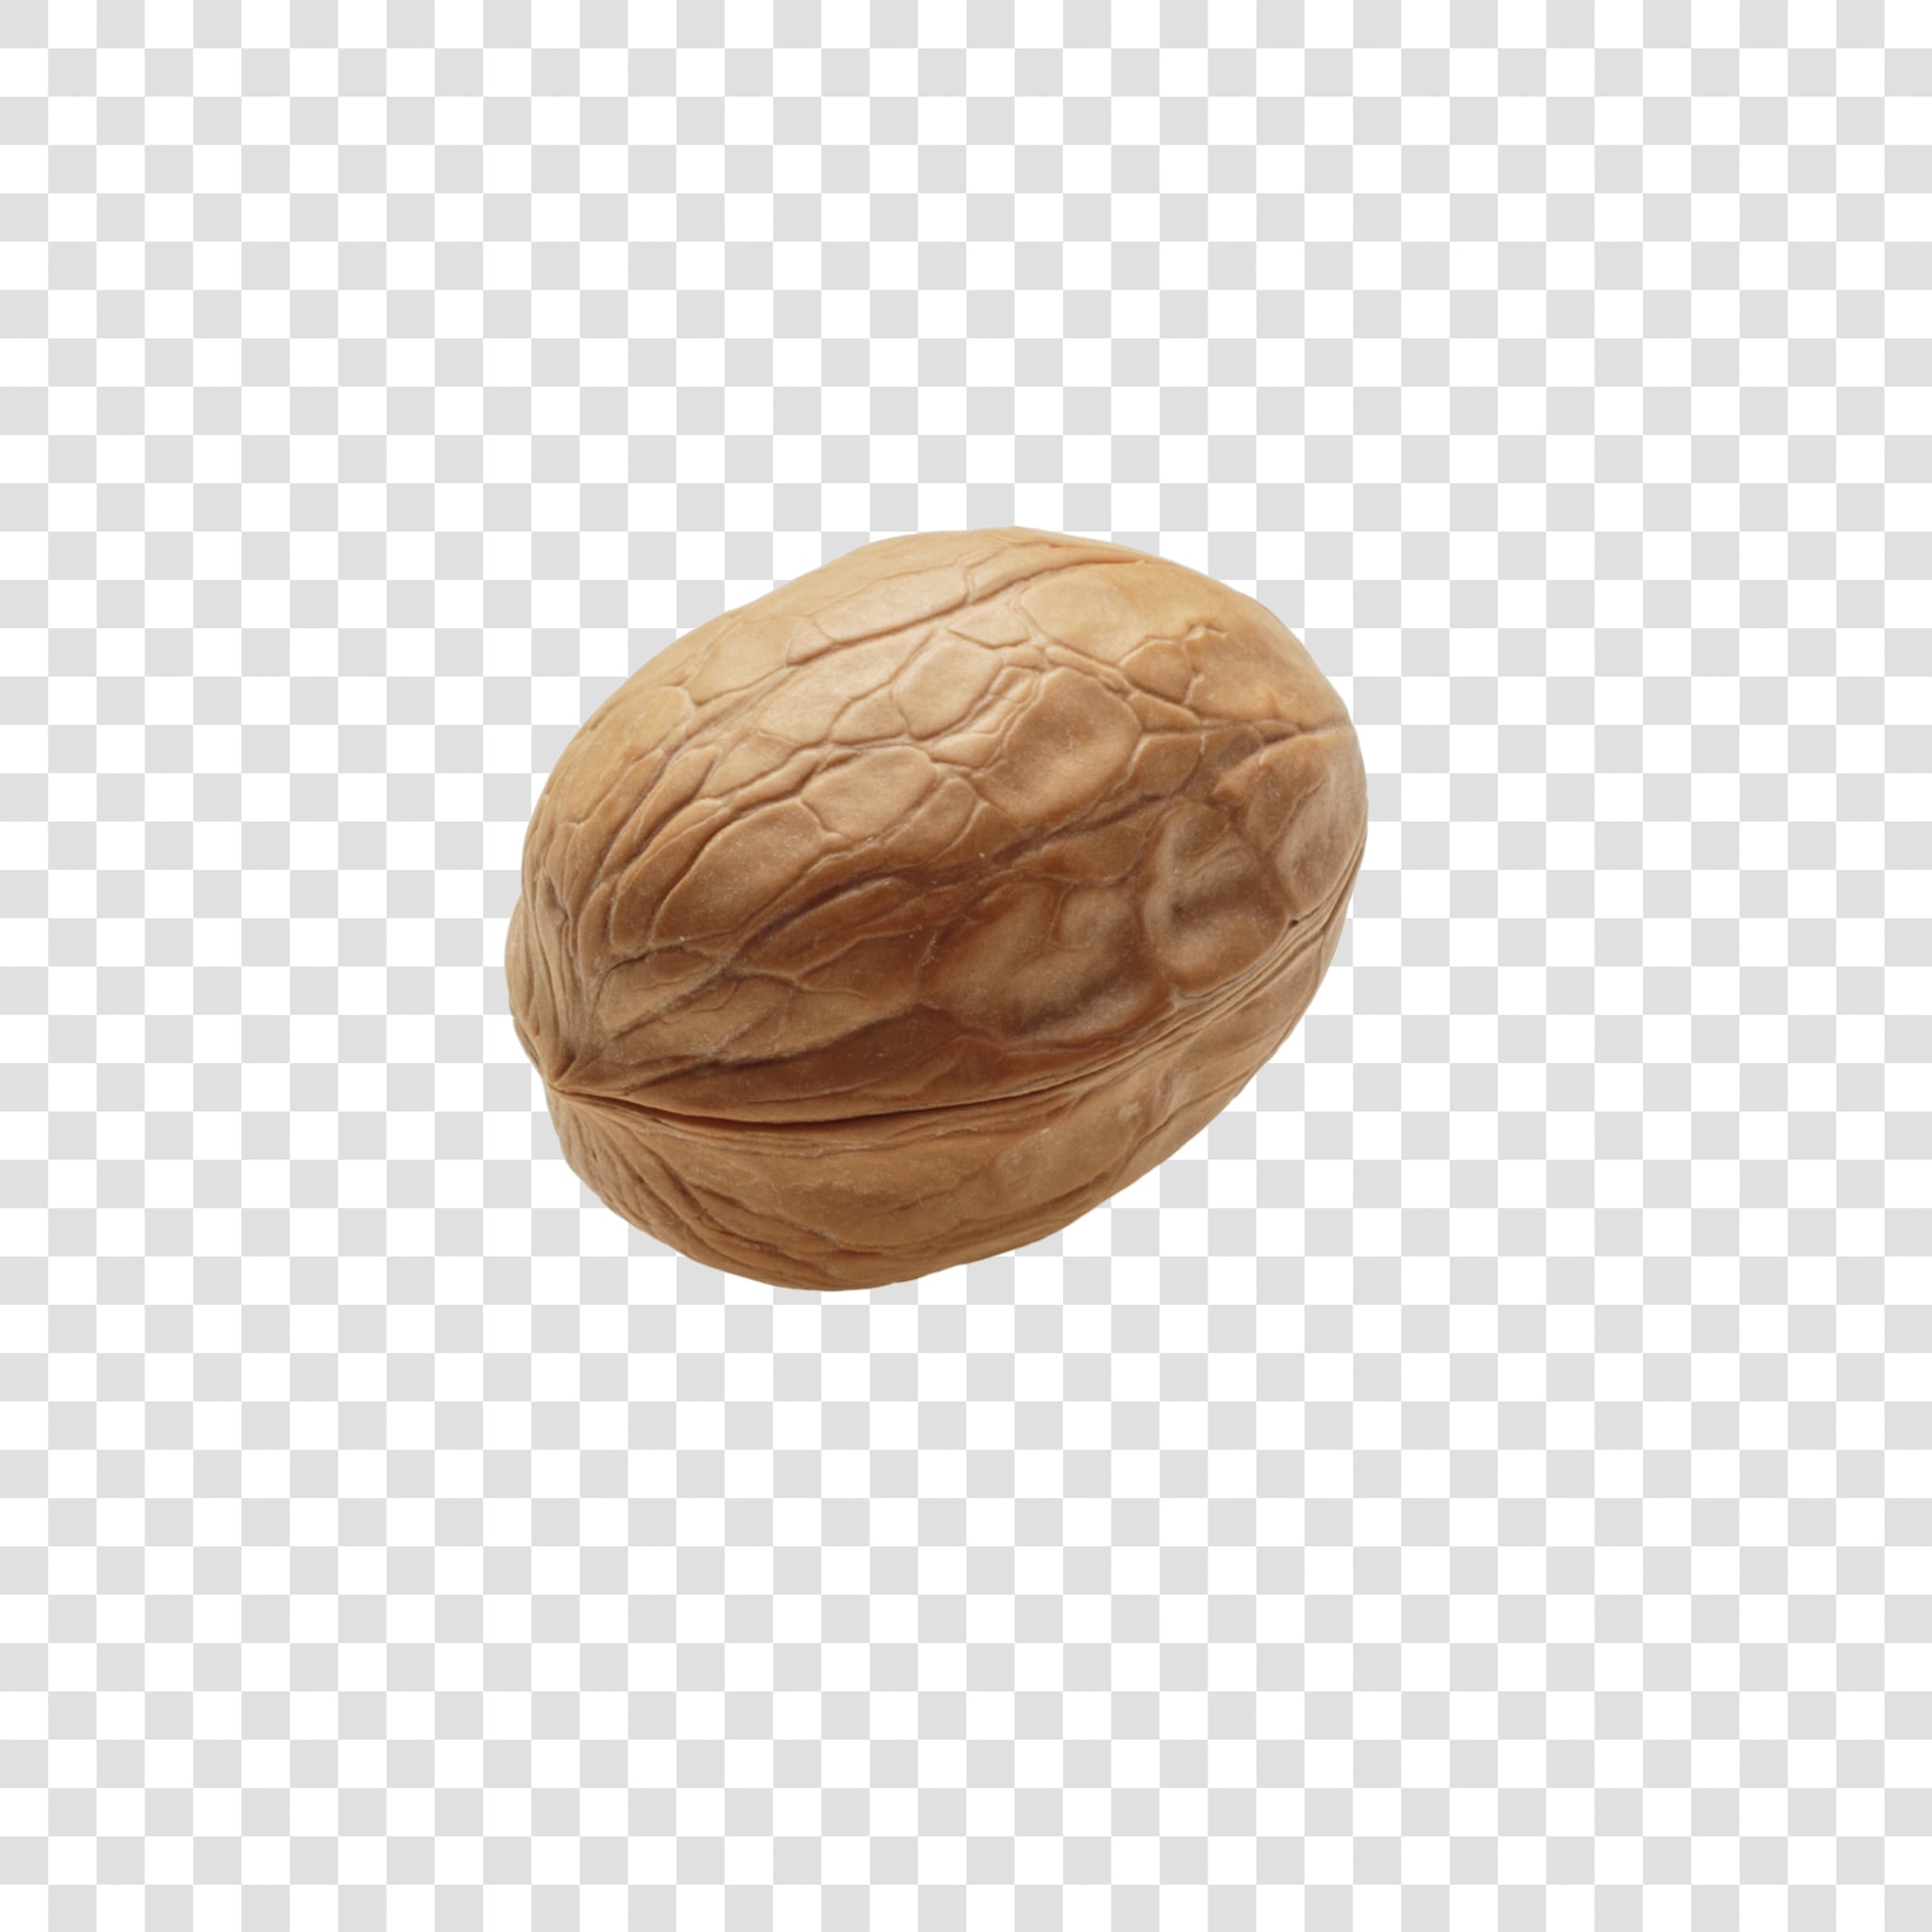 Walnut image with transparent background